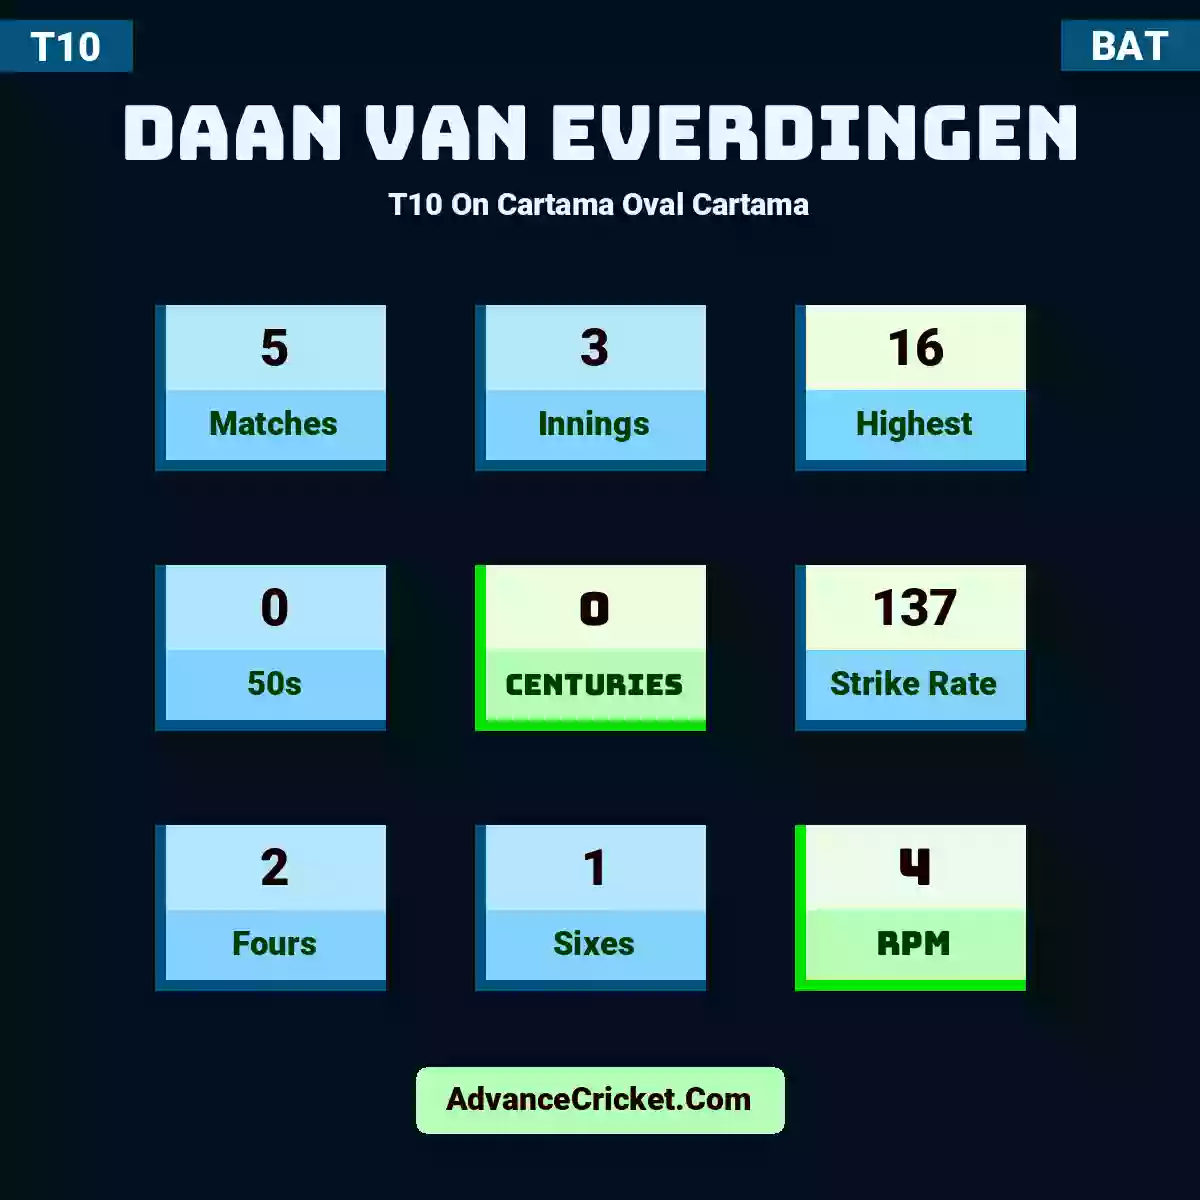 Daan Van Everdingen T10  On Cartama Oval Cartama, Daan Van Everdingen played 5 matches, scored 16 runs as highest, 0 half-centuries, and 0 centuries, with a strike rate of 137. D.Everdingen hit 2 fours and 1 sixes, with an RPM of 4.